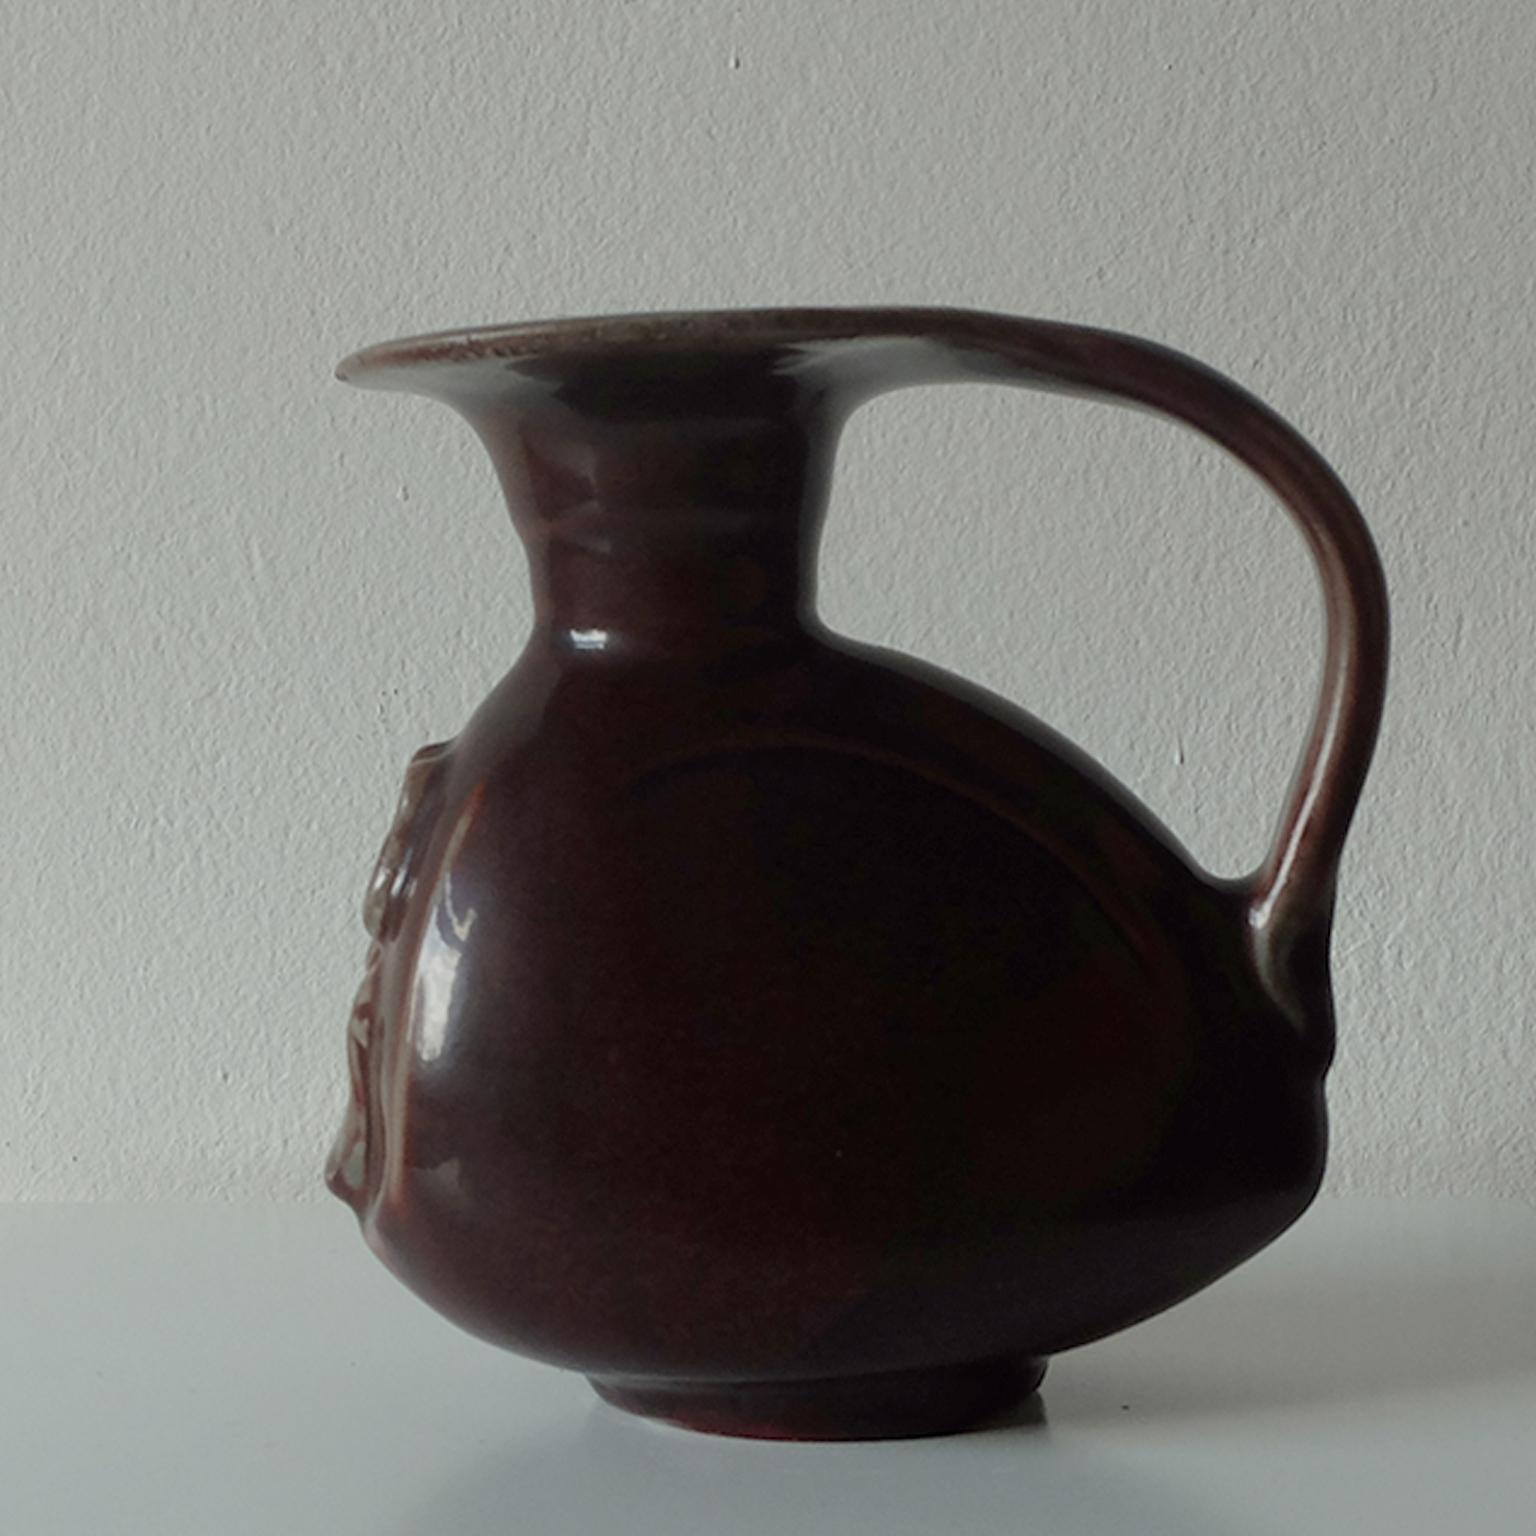 bode willumsen keramik